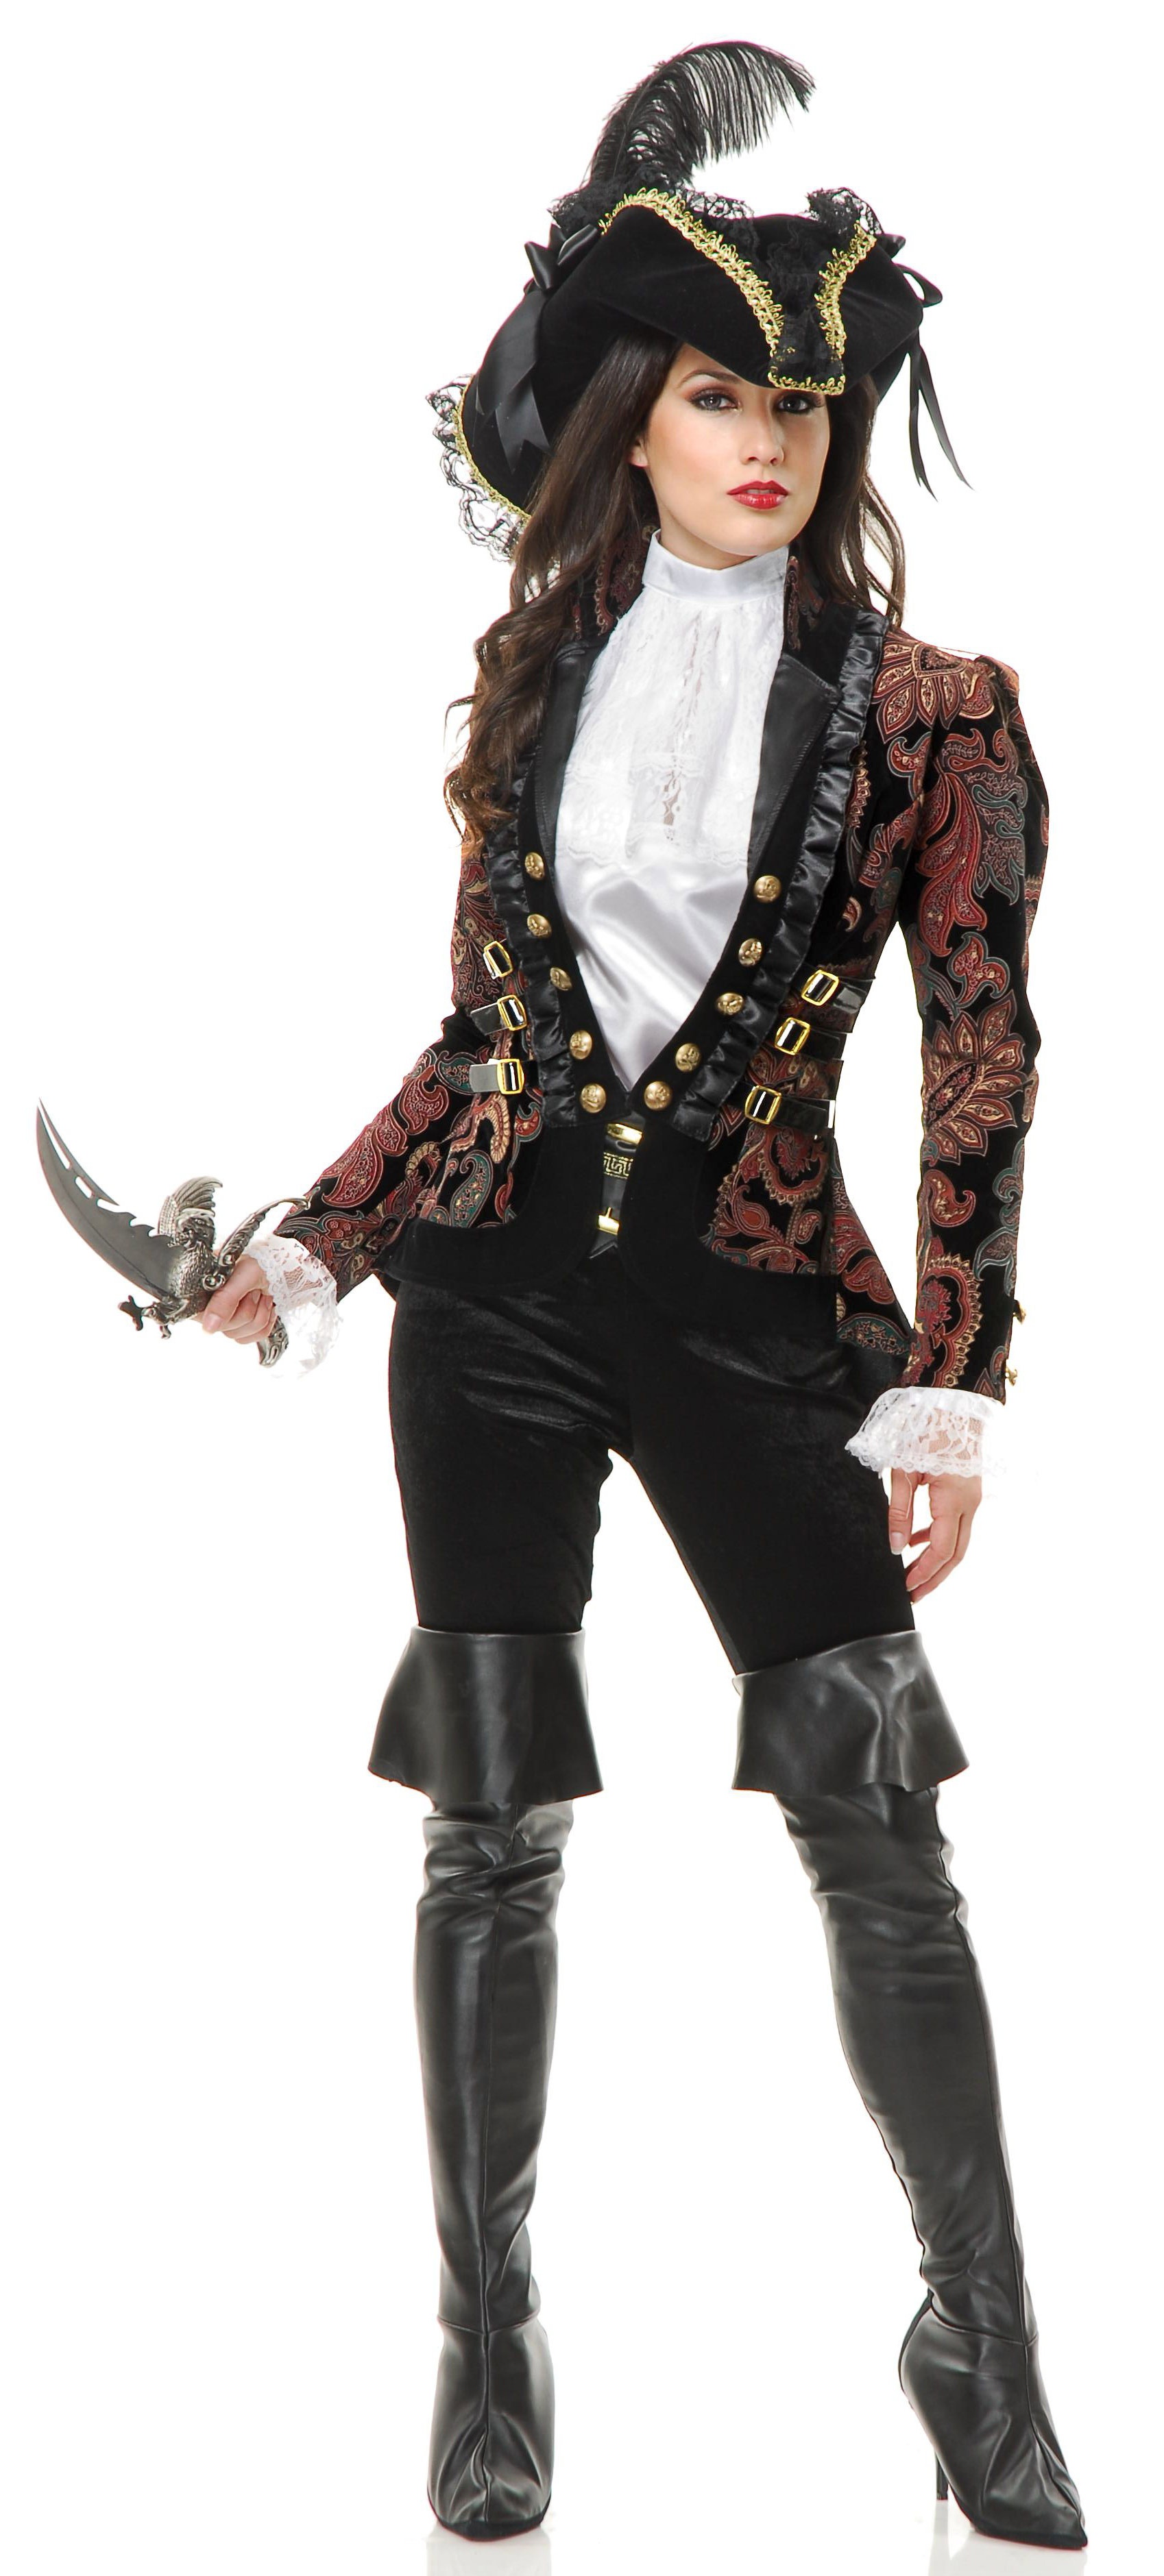 21+ Diy pirate costume woman ideas